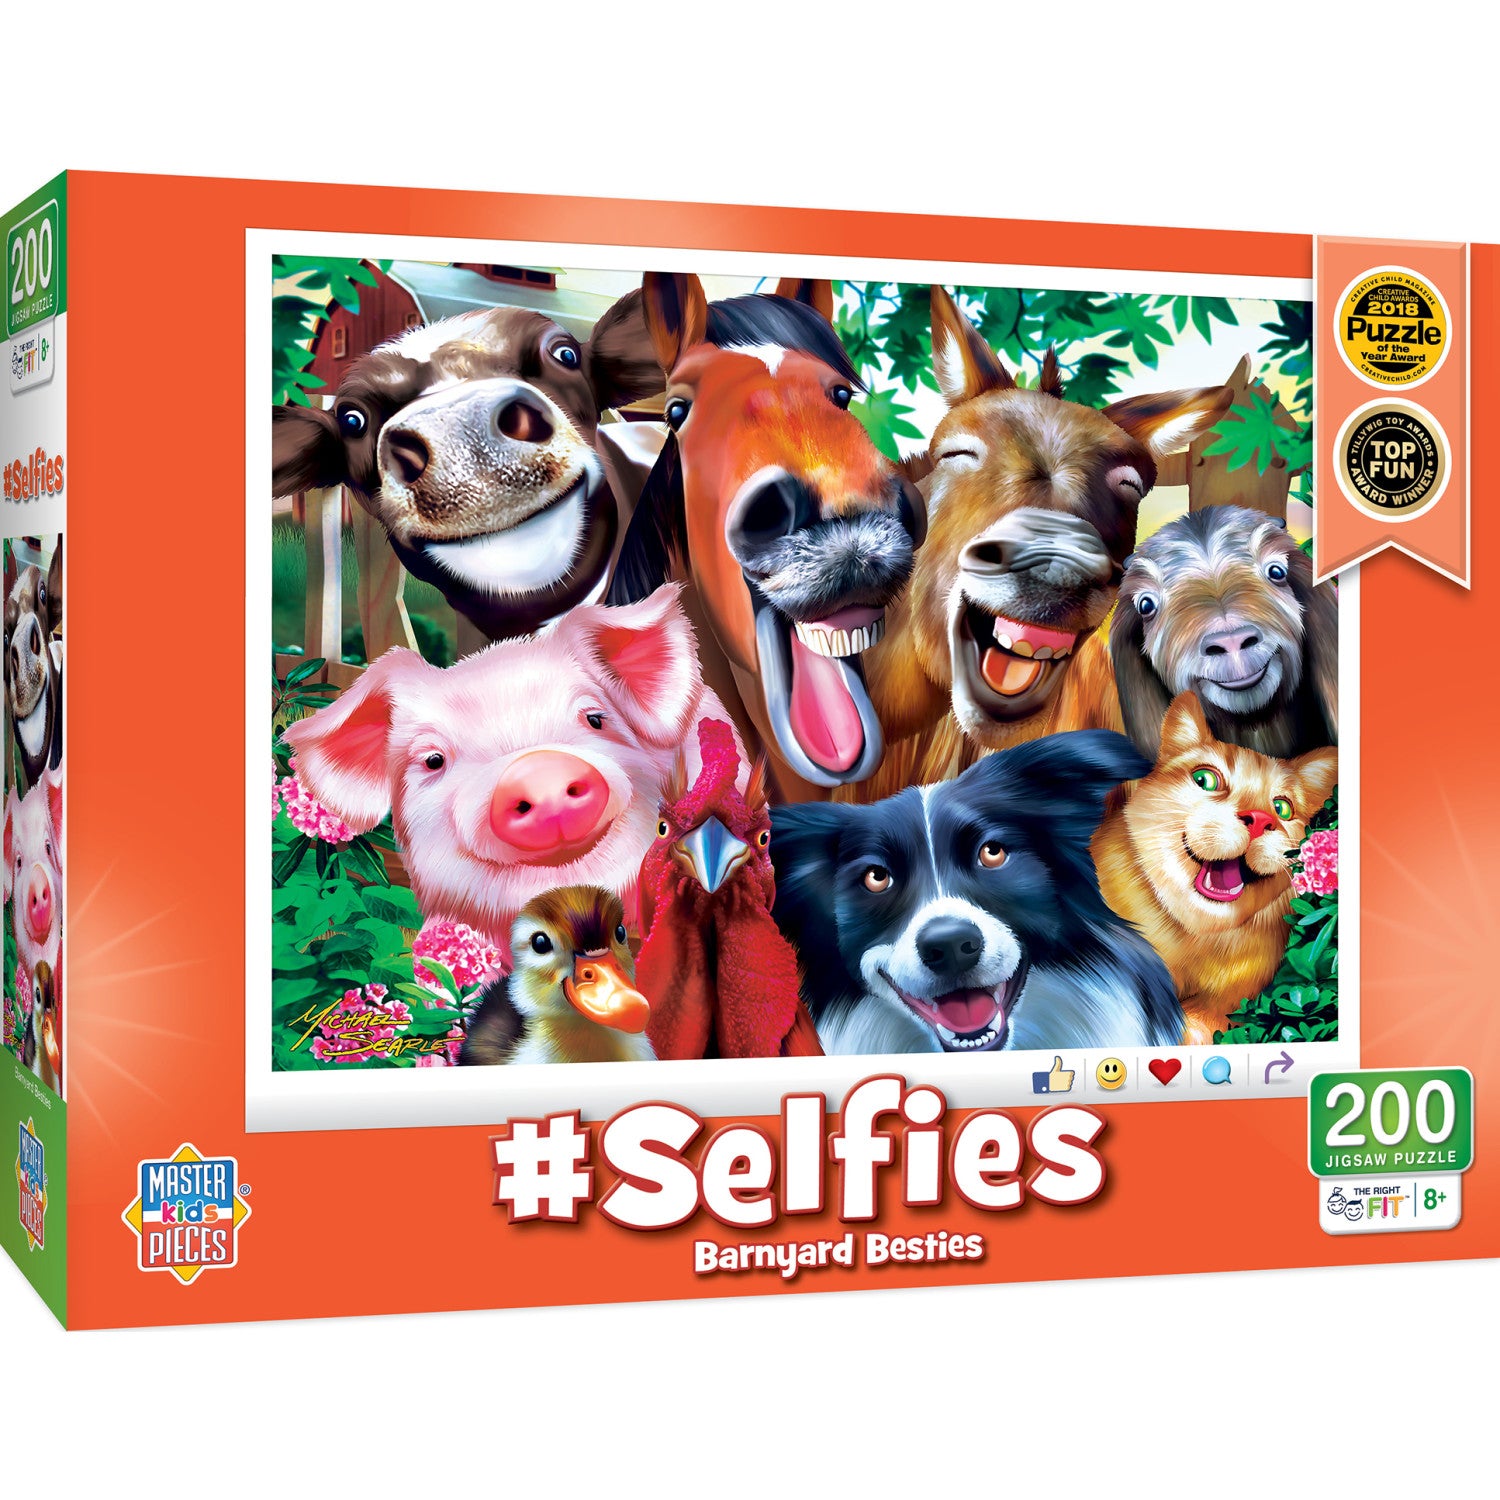 Selfies - Barnyard Besties 200 Piece Jigsaw Puzzle